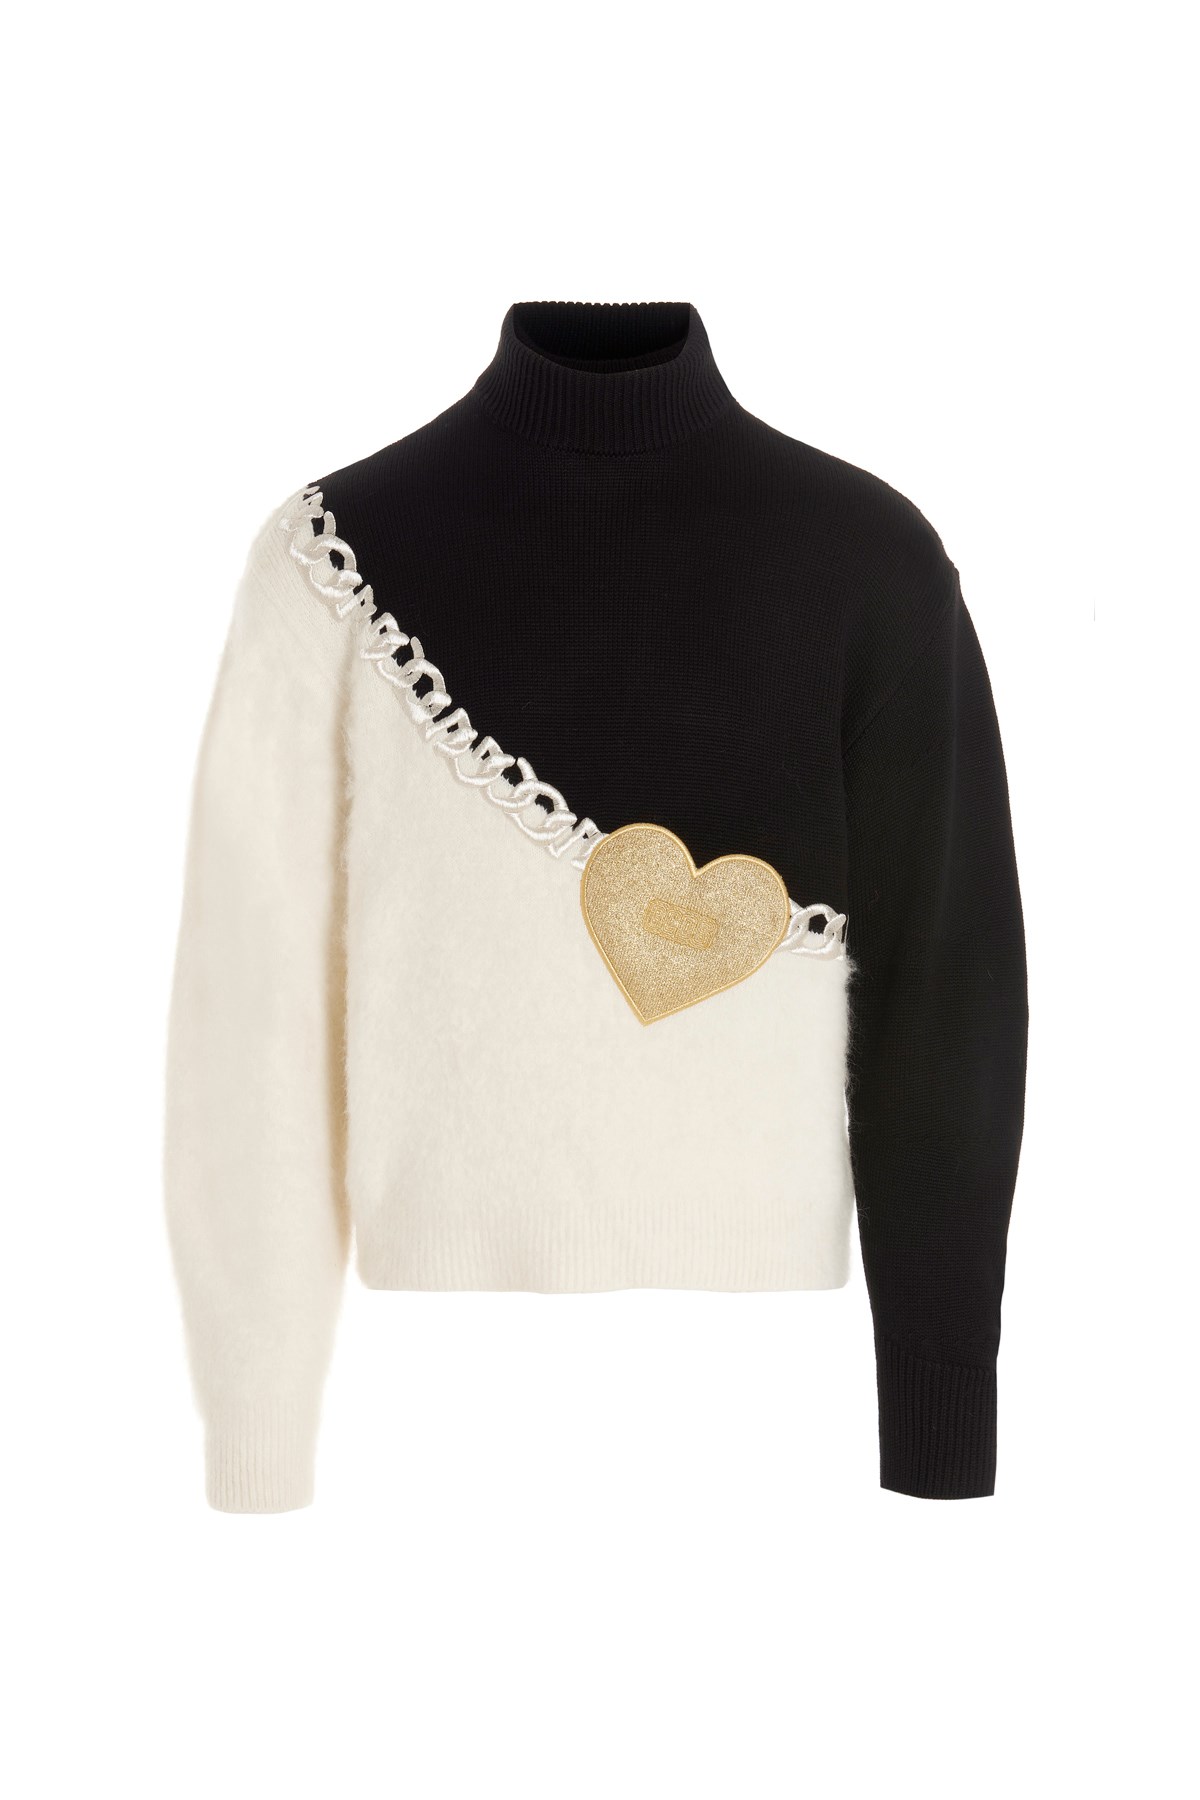 GCDS 'Heart' Sweater